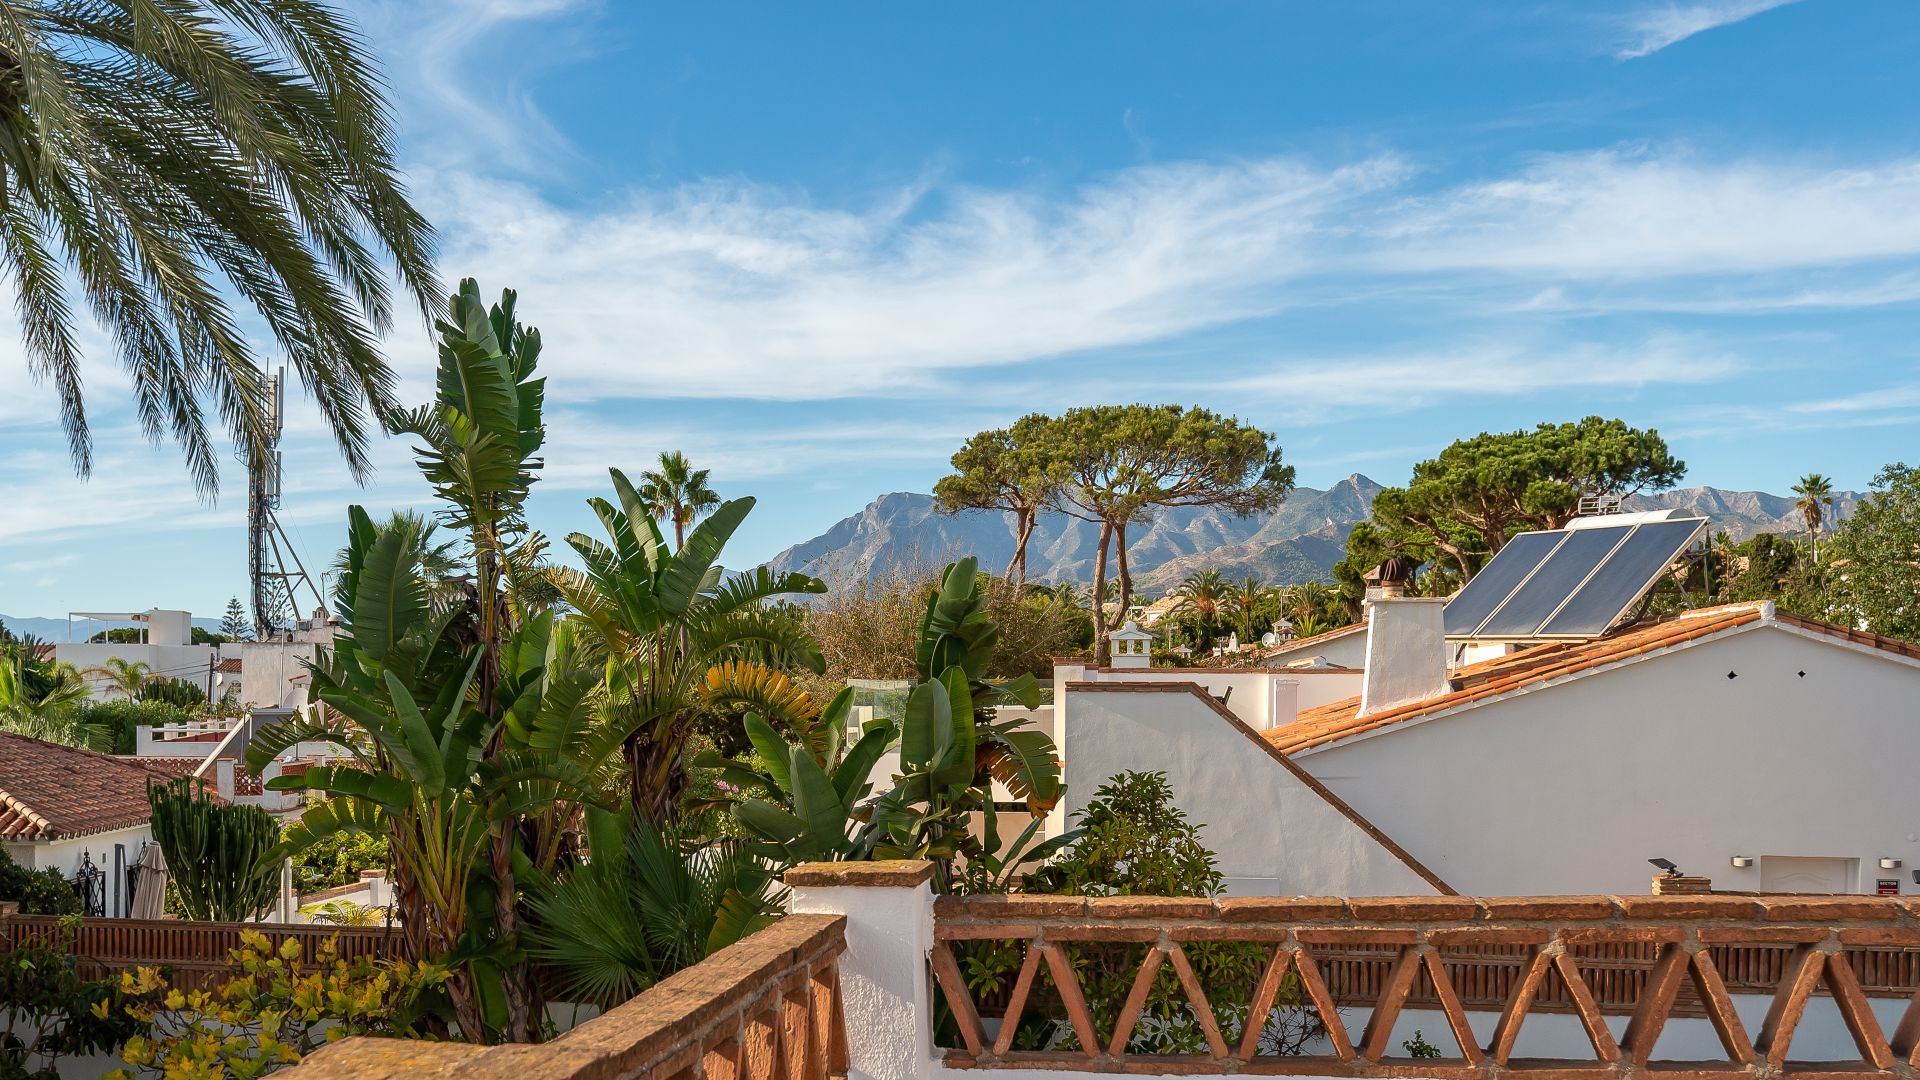 Charming villa a few metres from the beach | Engel & Völkers Marbella